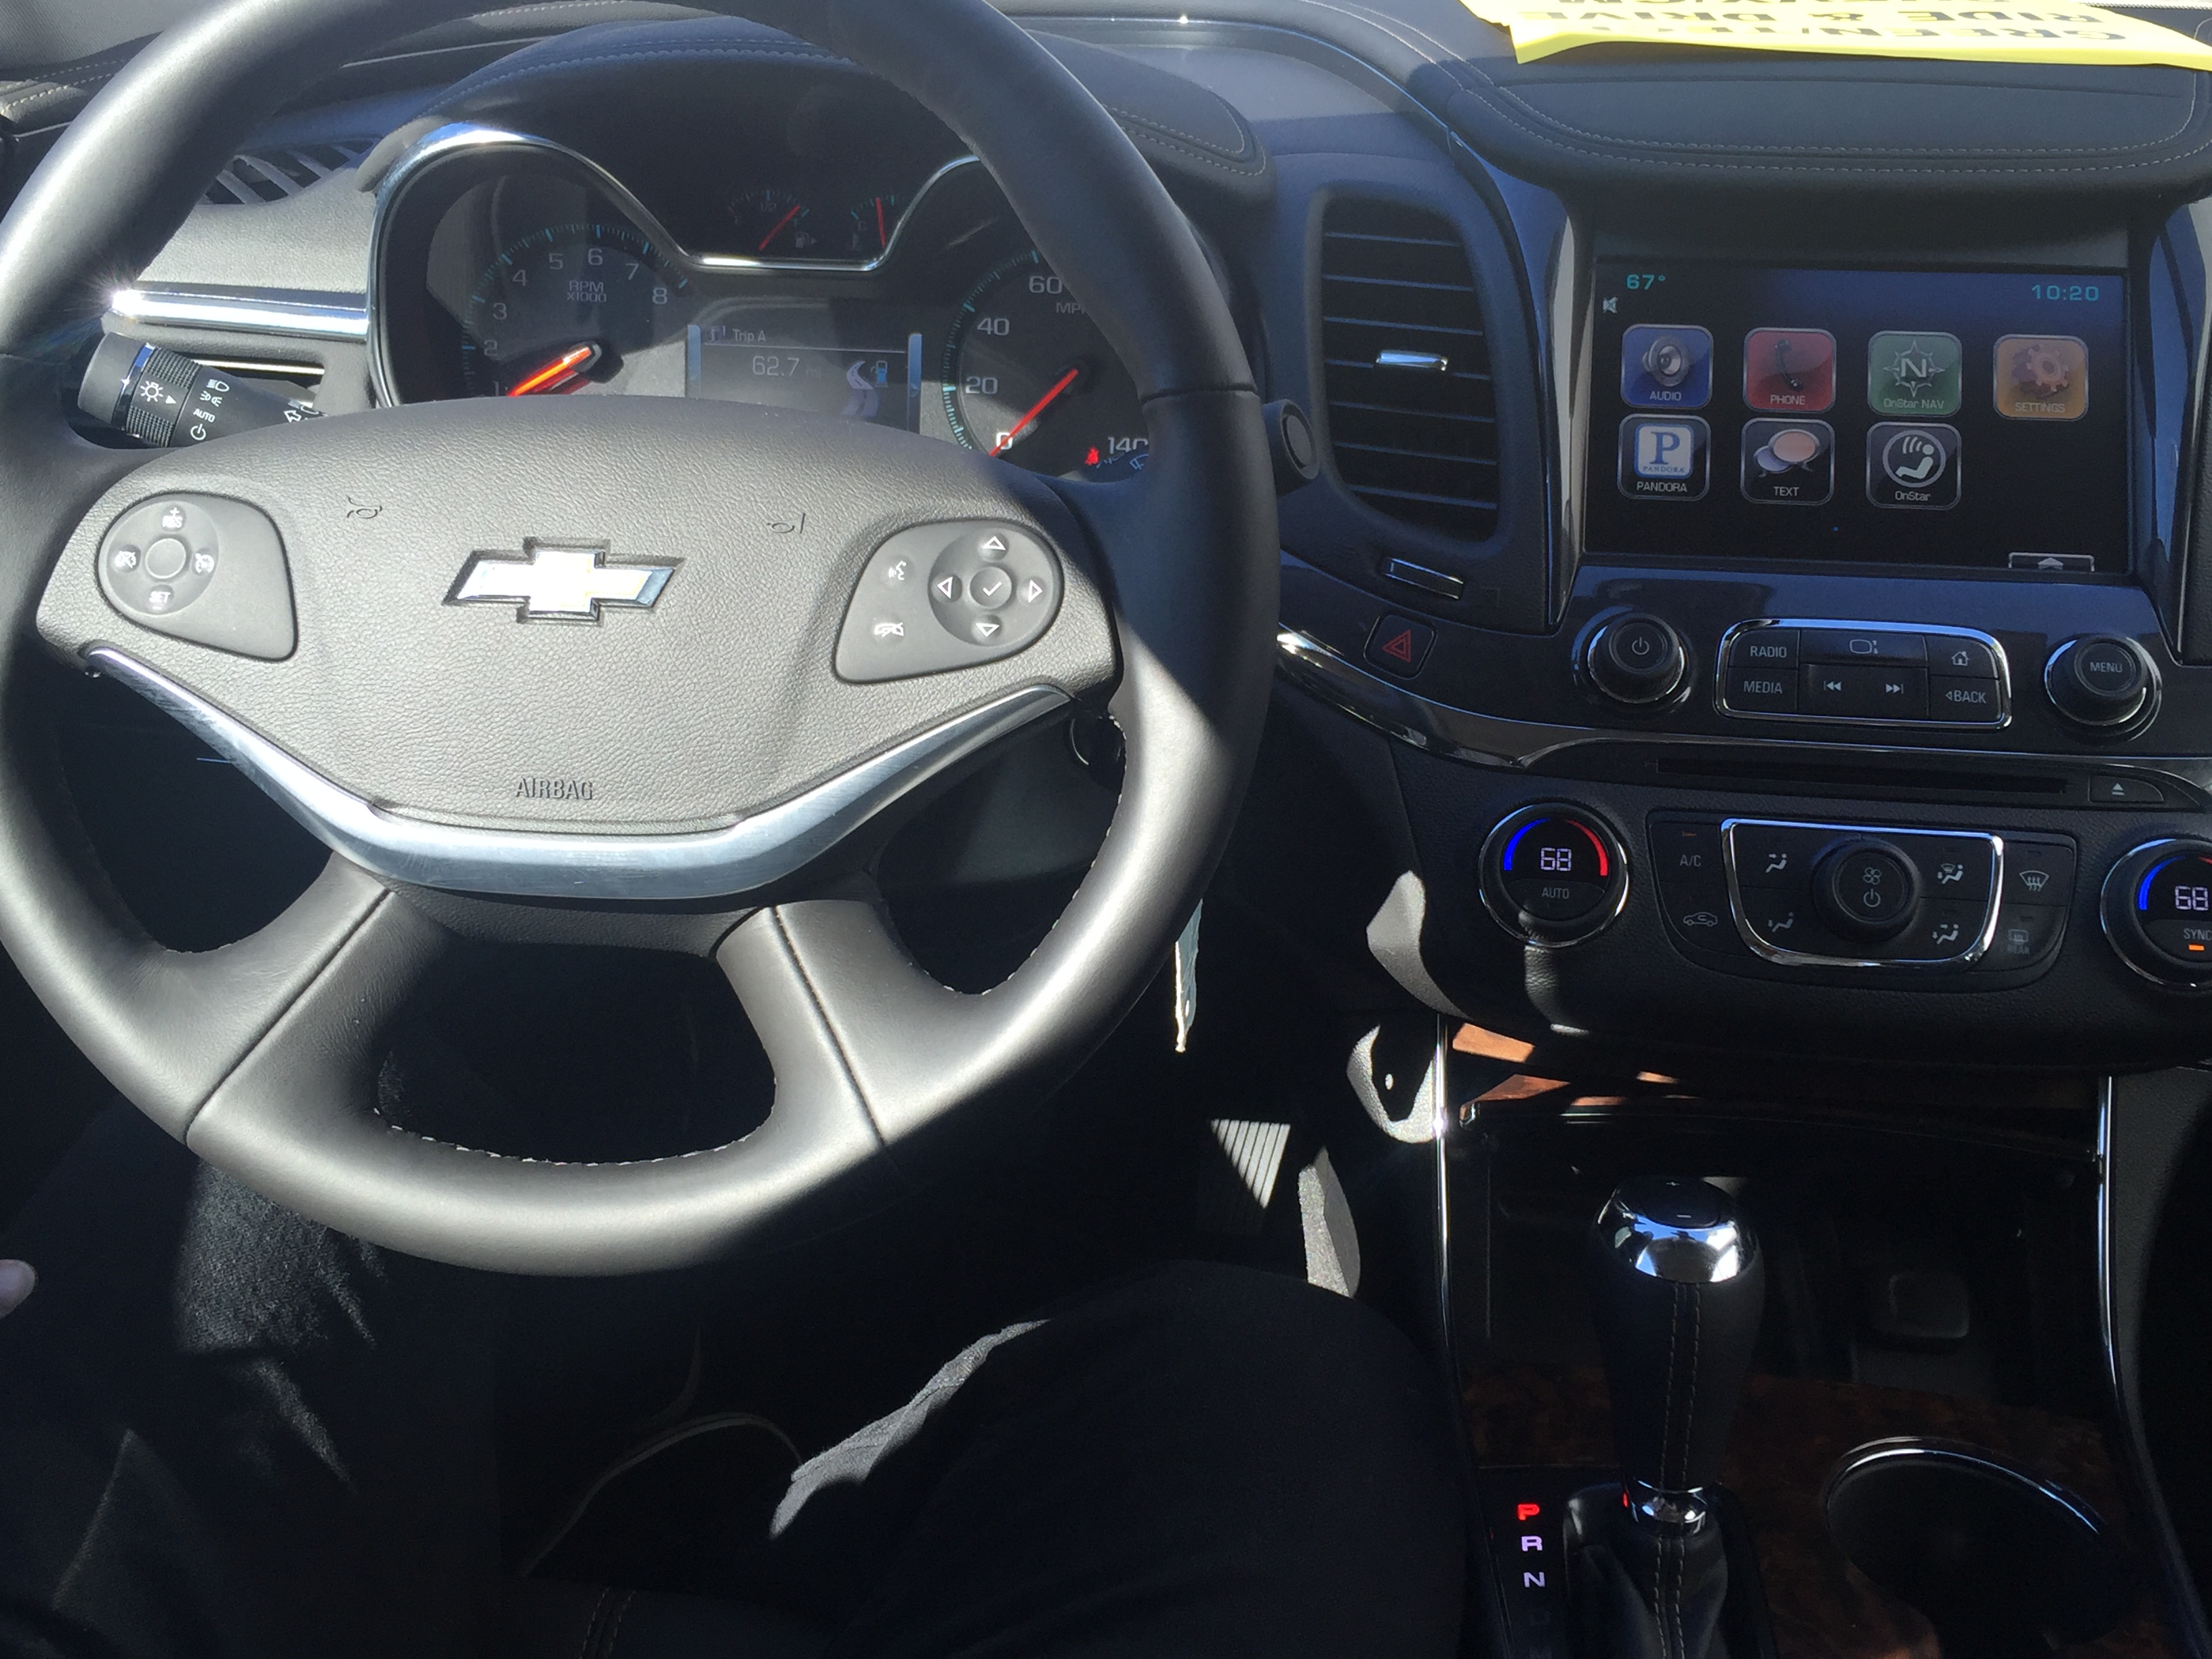 2015 Chevy Impala Bi Fuel Interior Fuel Freedom Foundation